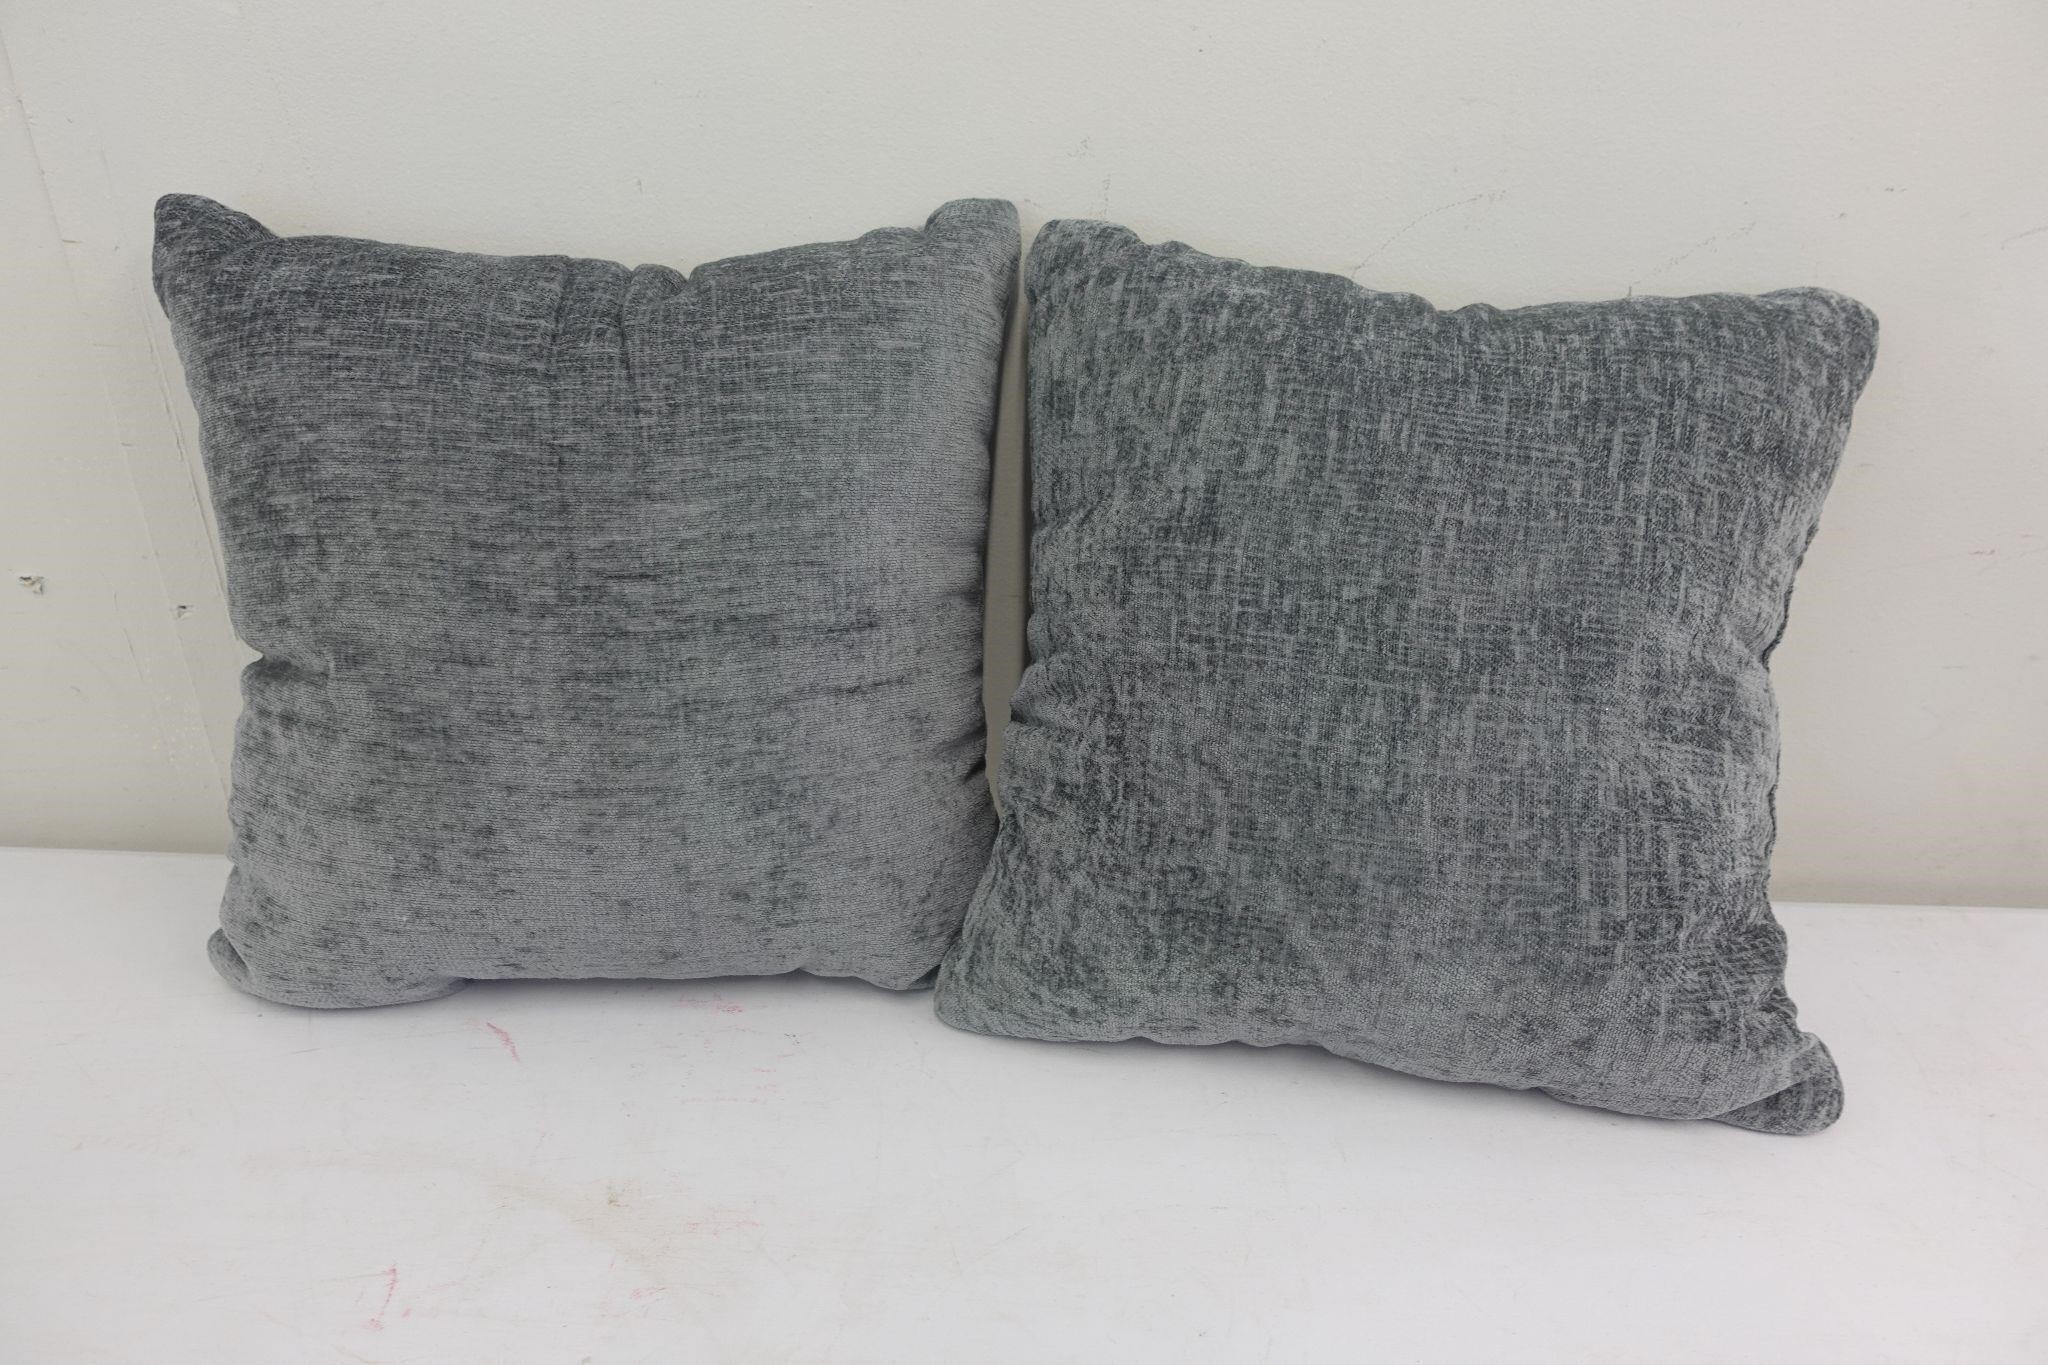 Grey Throw Pillows